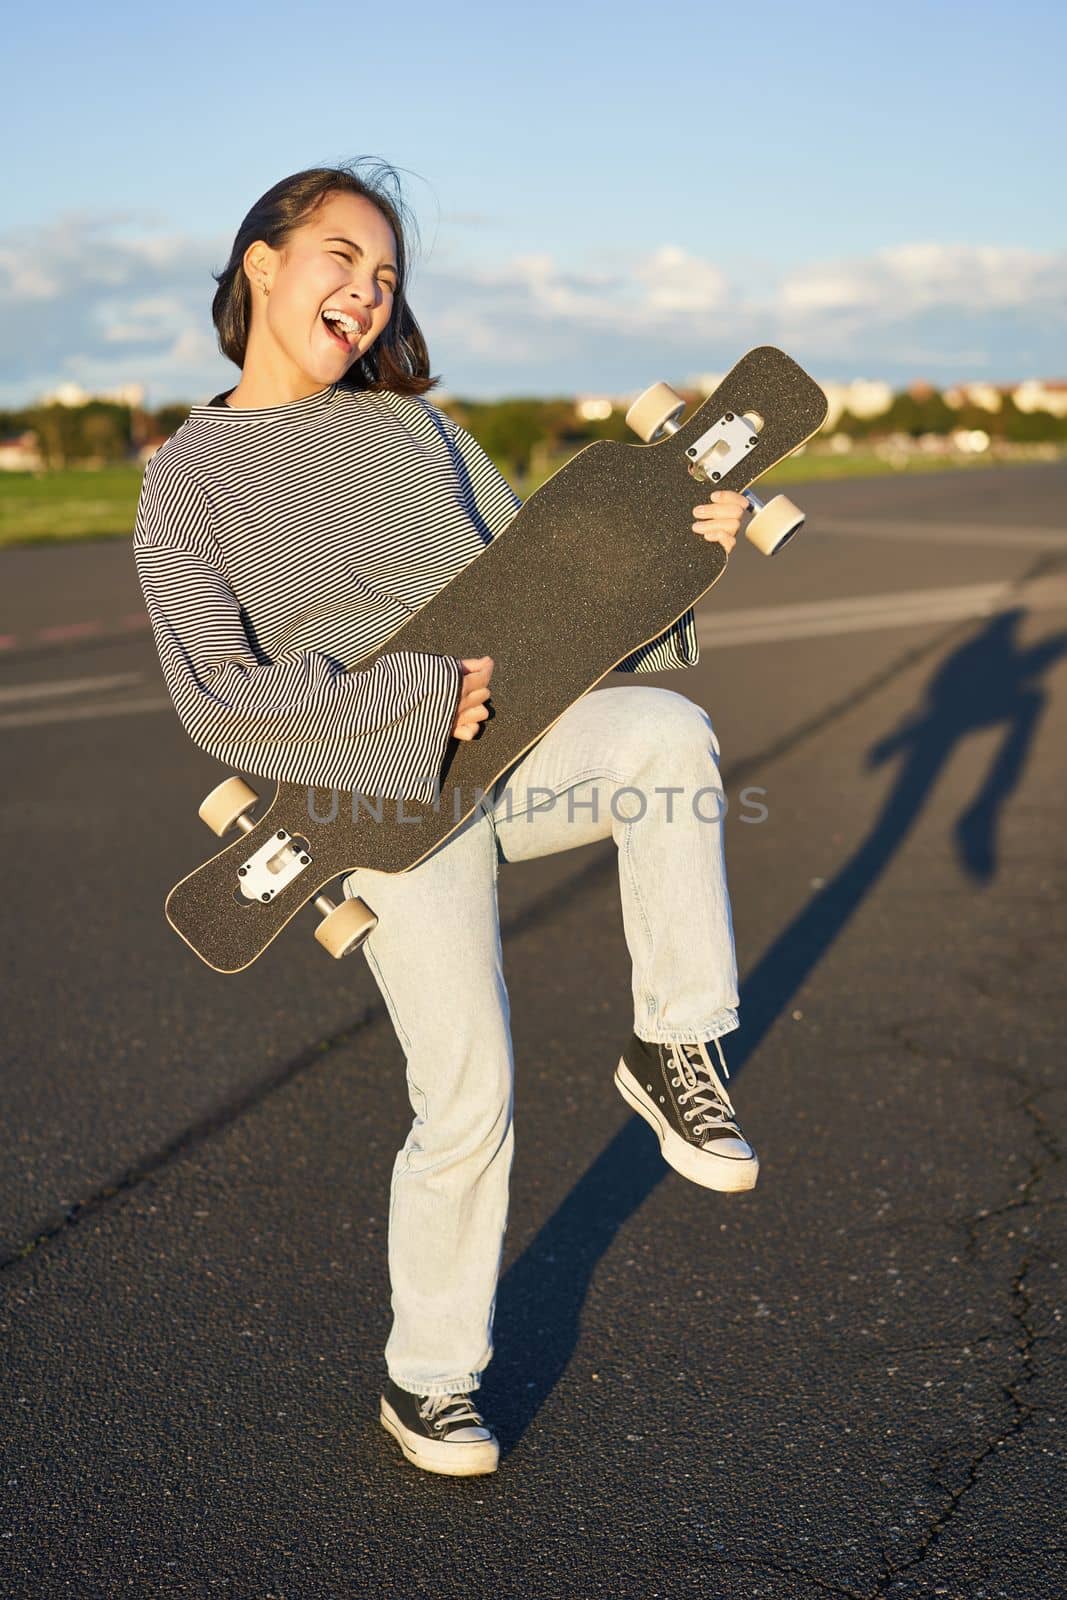 Funny asian girl enjoying skating, holding skateboard like guitar and shadow playing, having fun outdoors by Benzoix